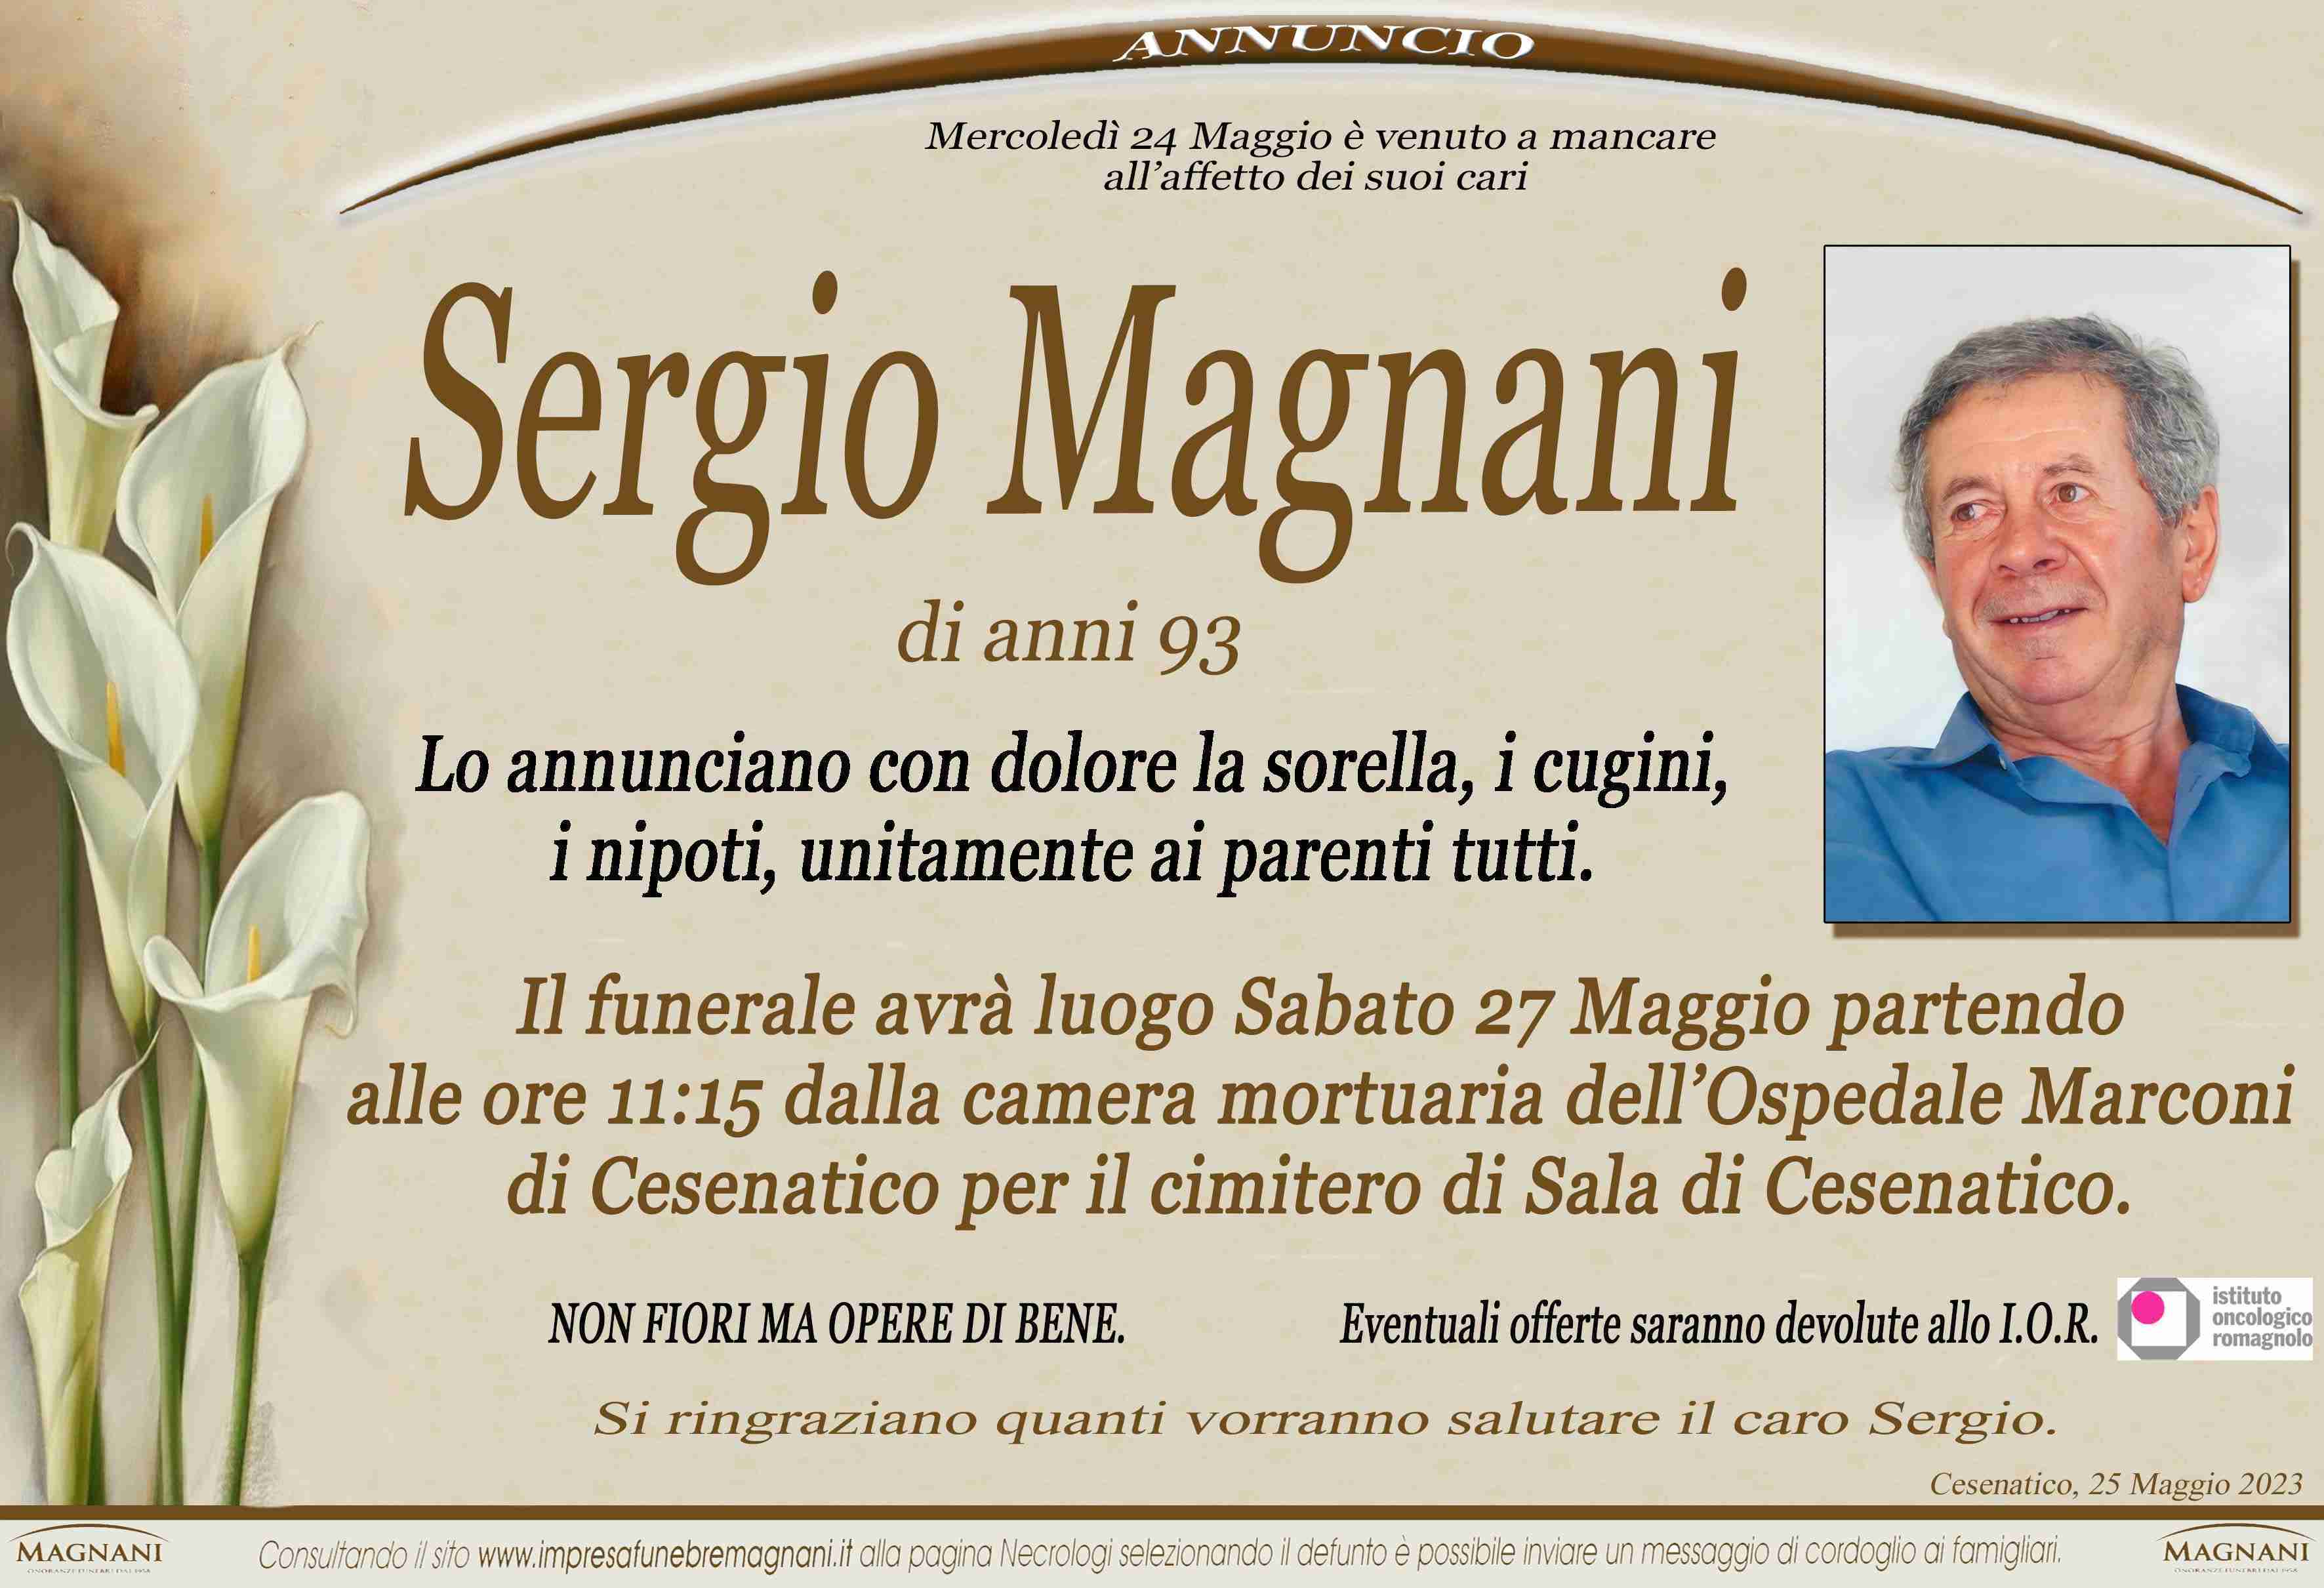 Sergio Magnani